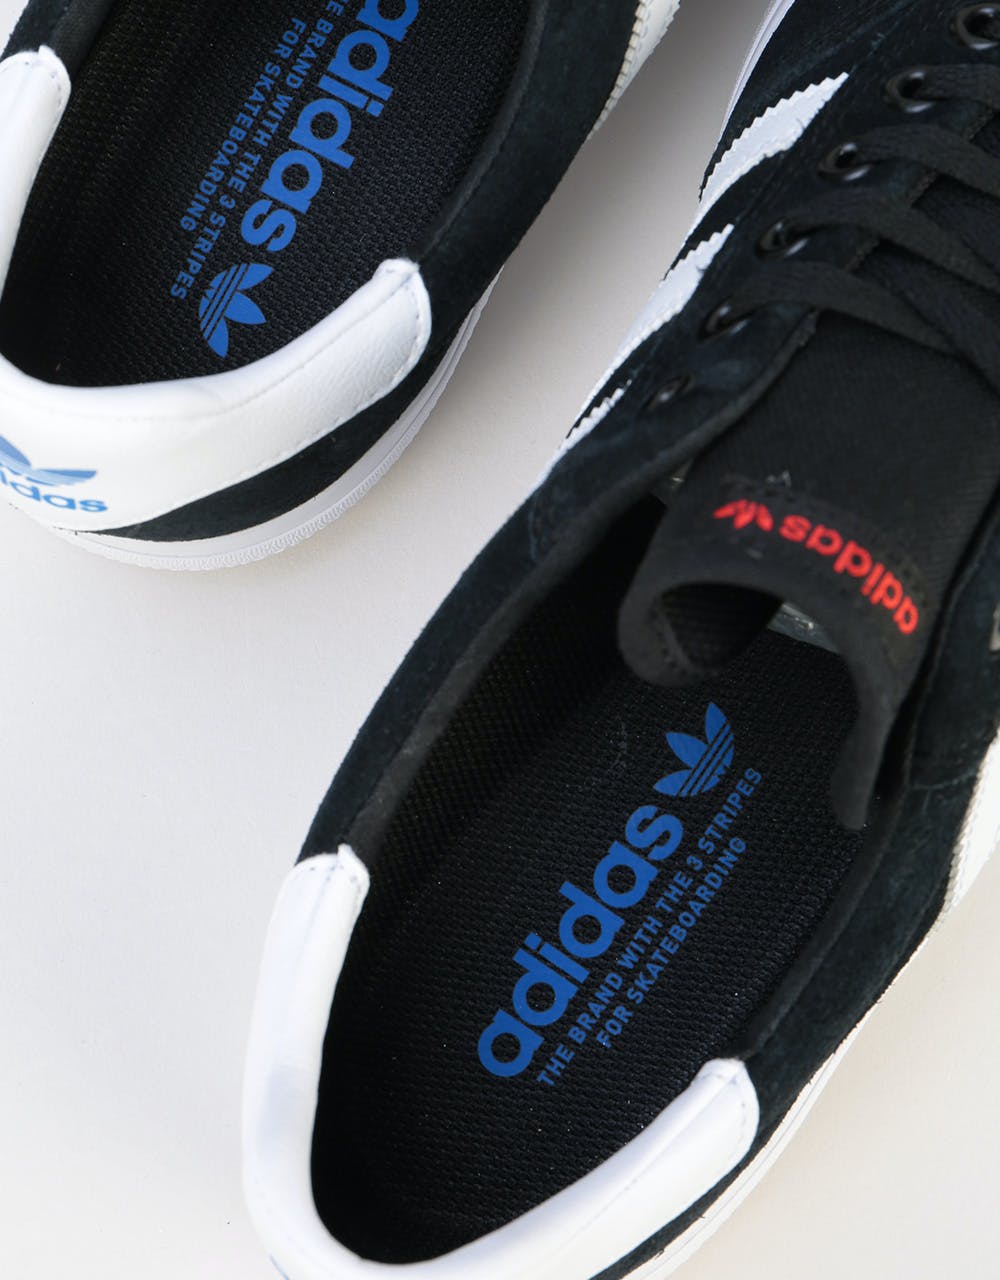 Adidas 3MC Skate Shoes - Core Black/White/Red/Blue